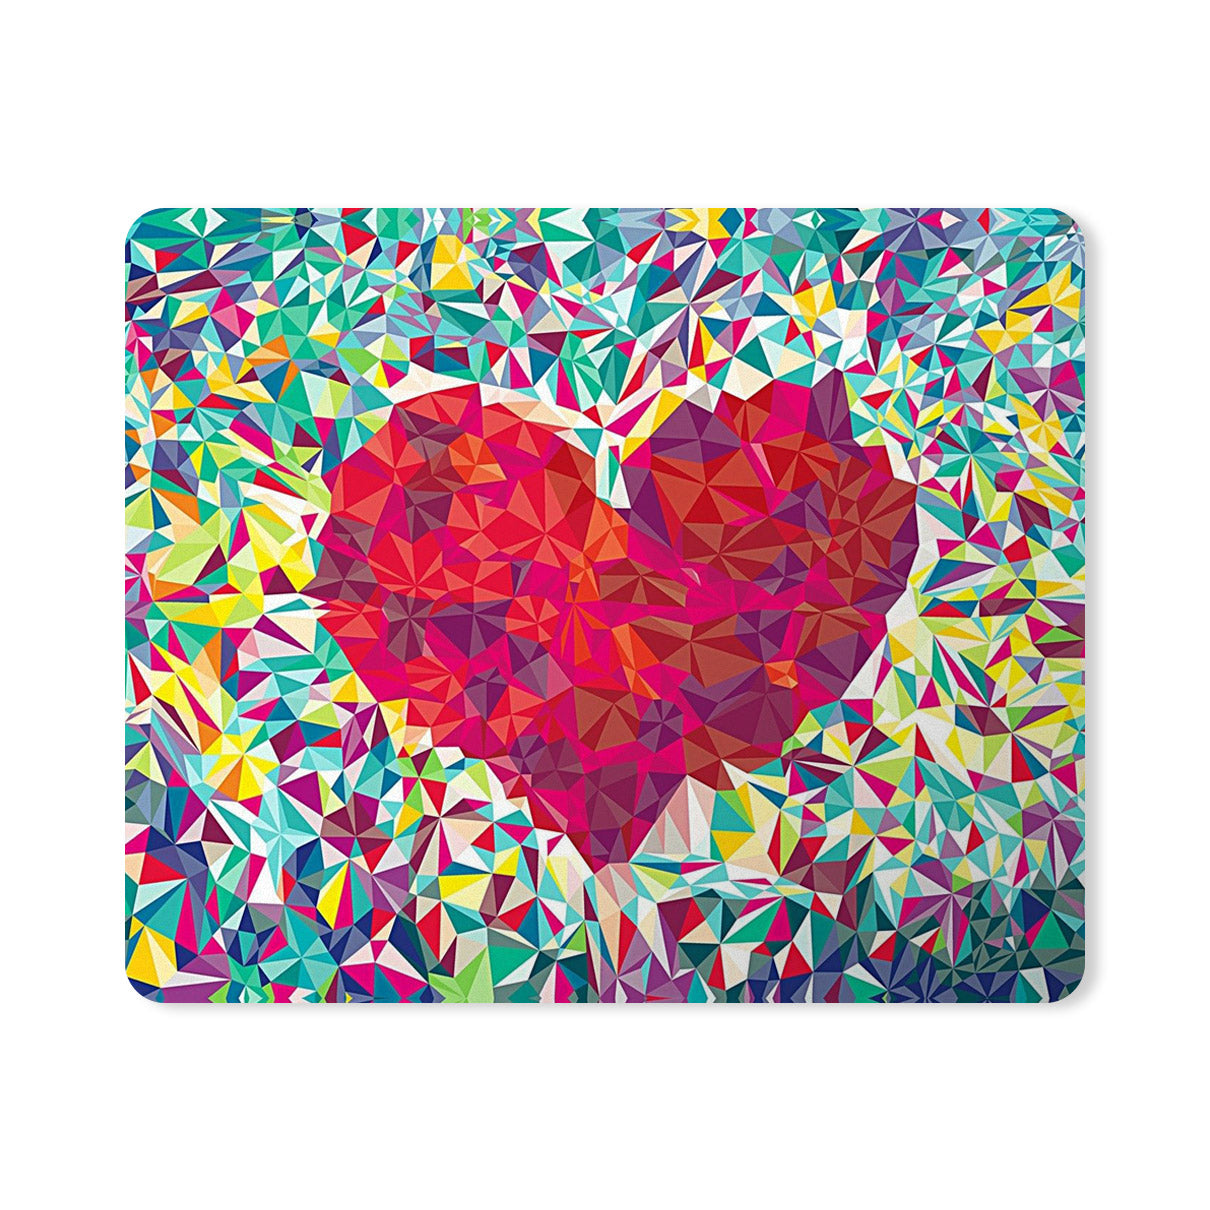 Heart Mirror Pieces Designer Printed Premium Mouse pad (9 in x 7.5 in)